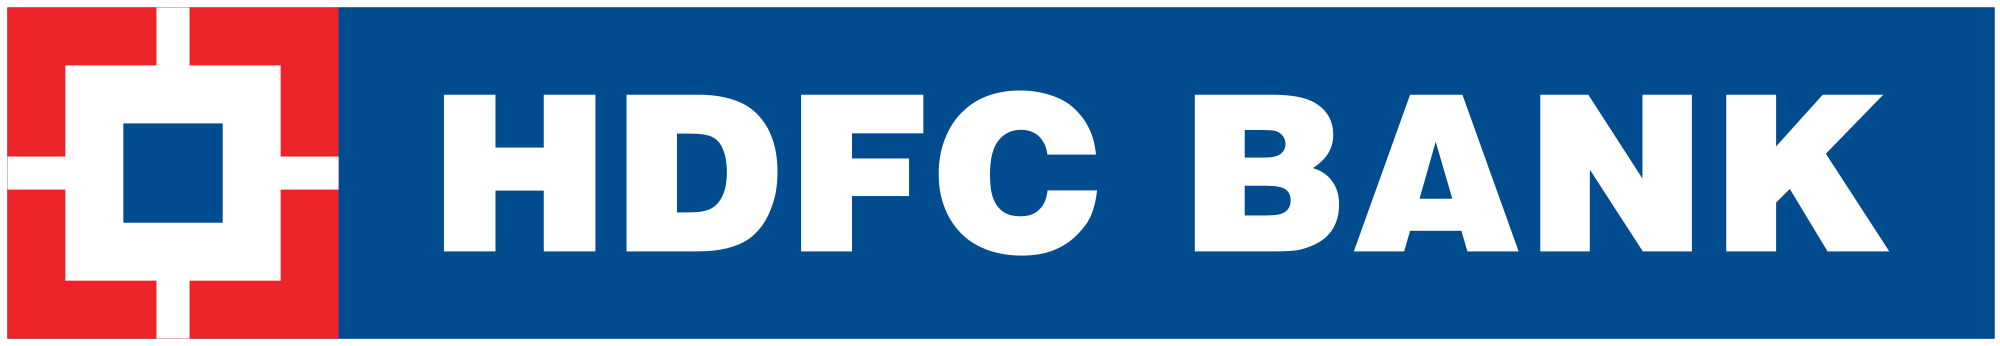 HDFC Bank Brand Logo